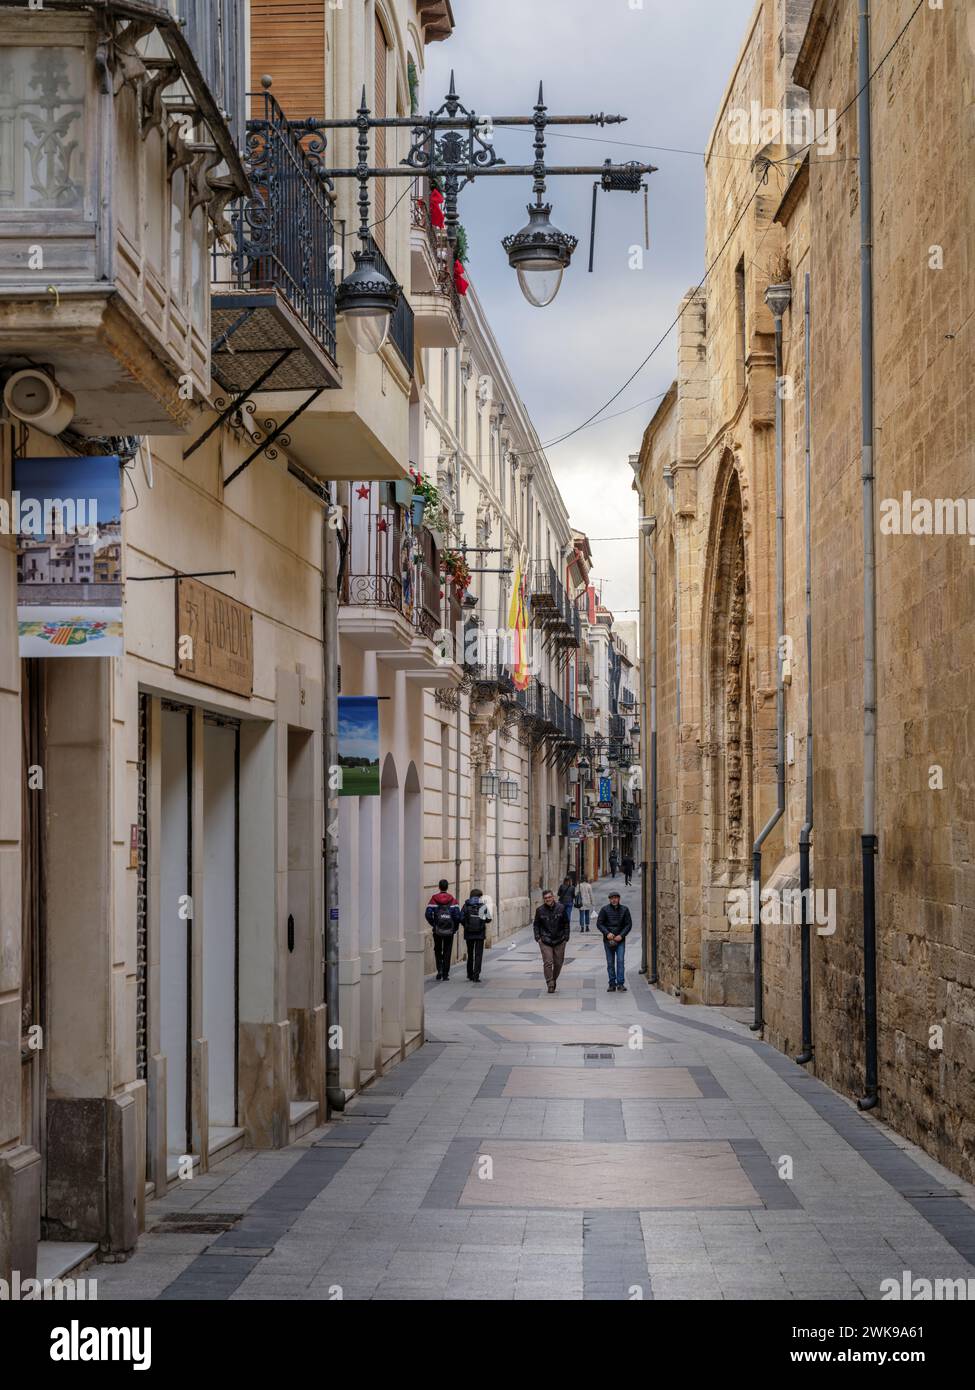 Calle Mayor de Ramón Y Cajal - Orihuela, Alicante, Spanien. Eine der engen Gassen, die entlang der Kathedrale von El Salvador verläuft, die Orihuelas m ist Stockfoto